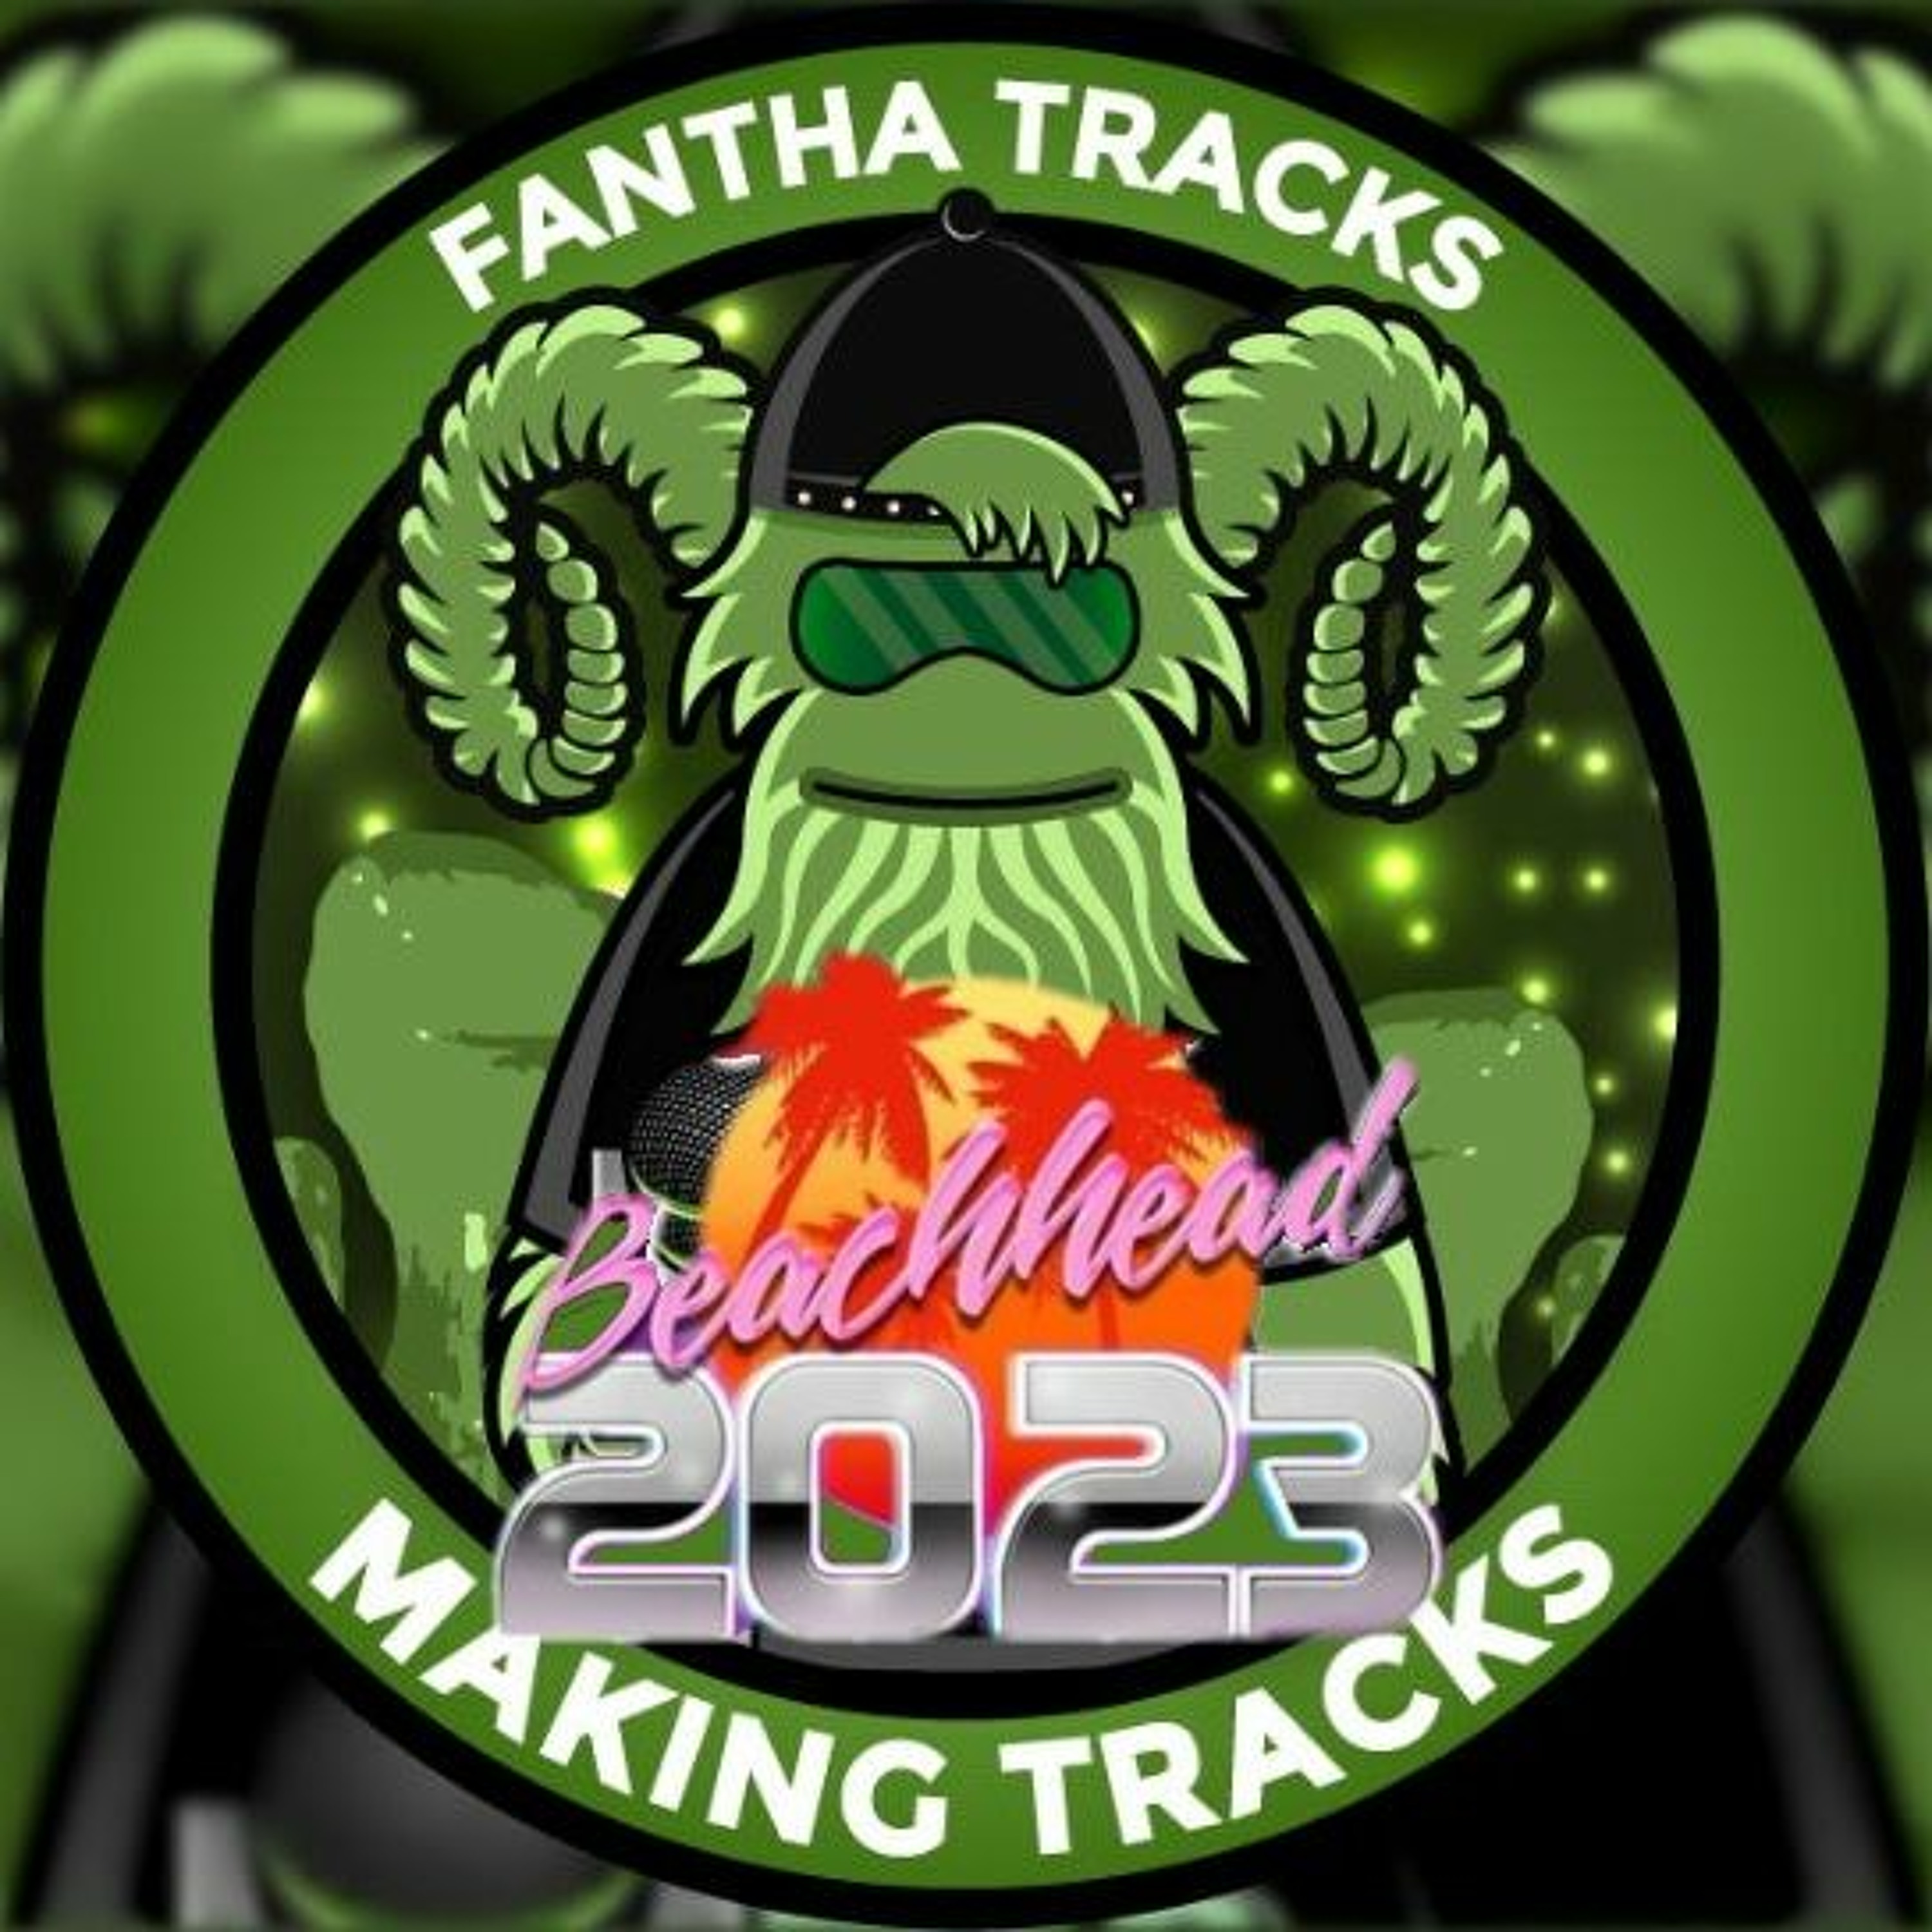 Making Tracks: Nick Clark at Beachhead 2023